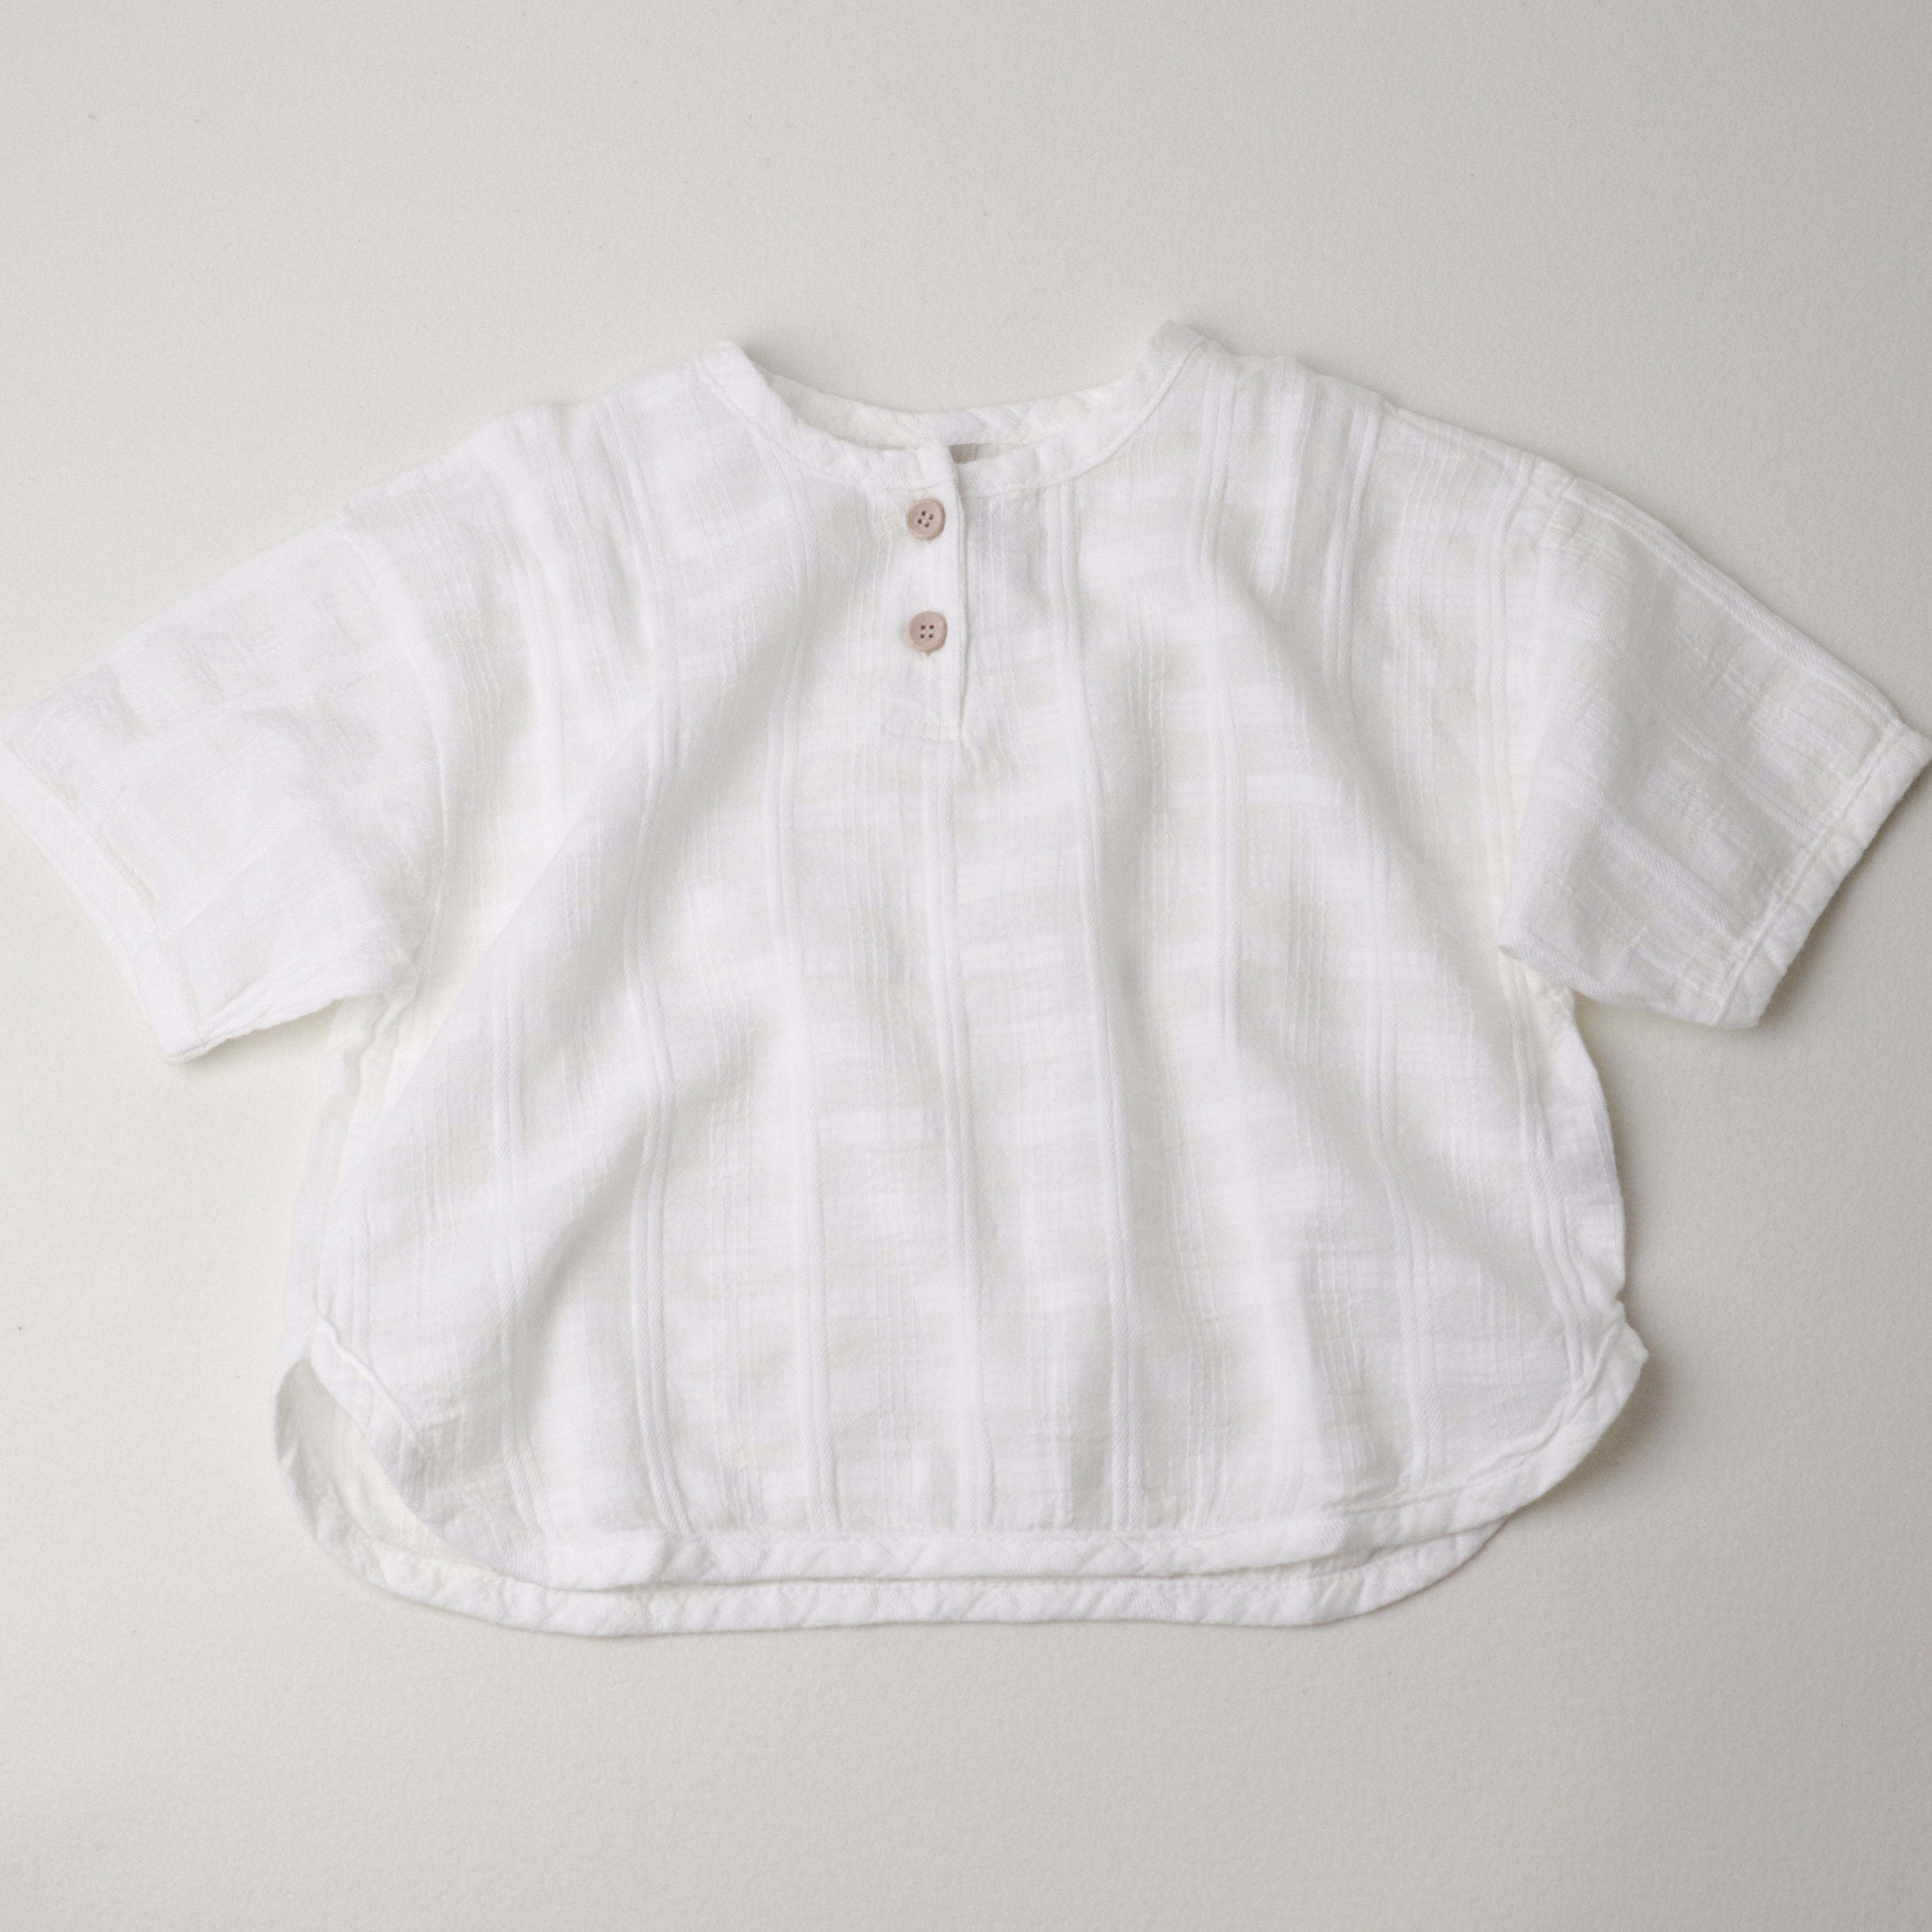 Lacamel Rev Shirt Baby &Kids (Ready Stock)